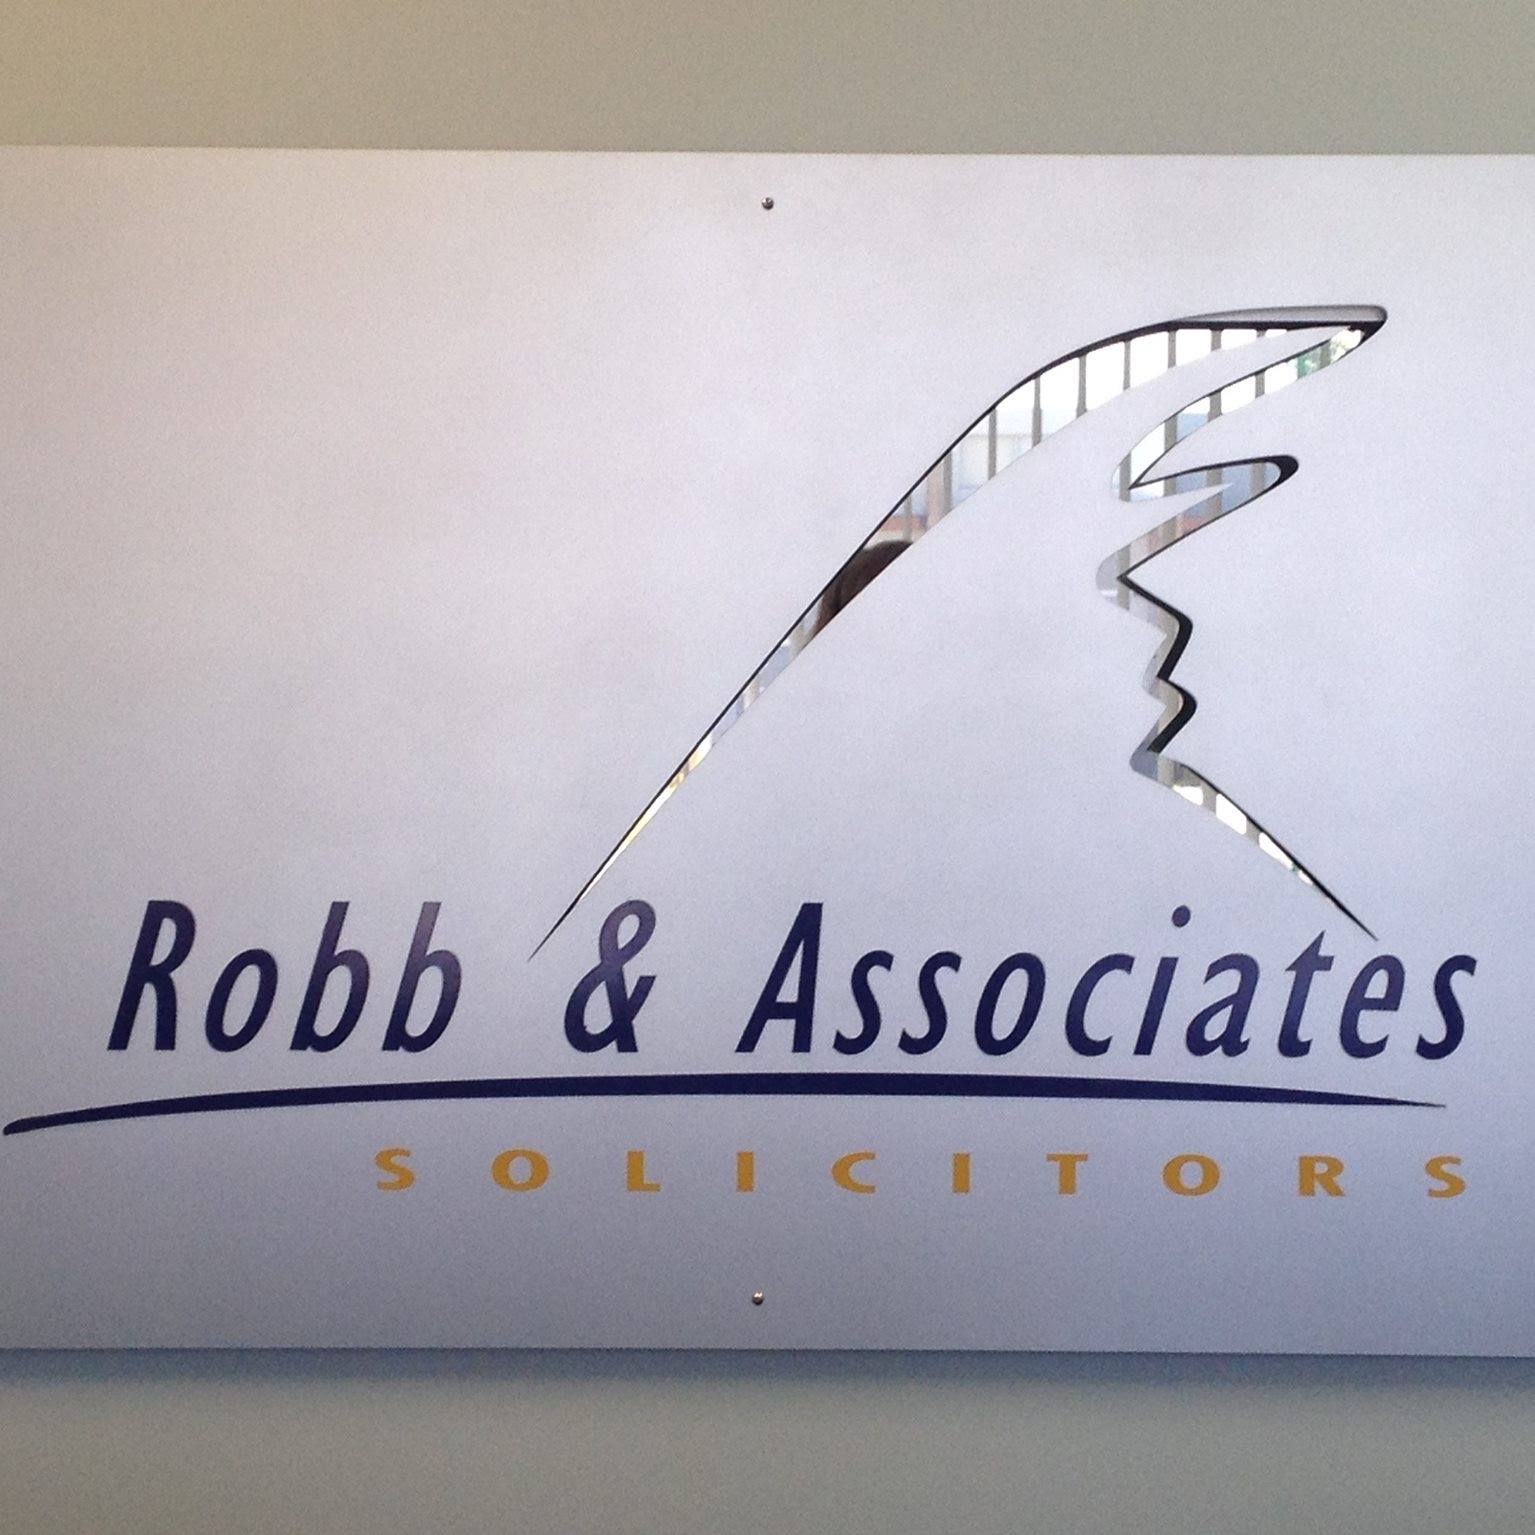 Company logo of Robb & Associates Solicitors